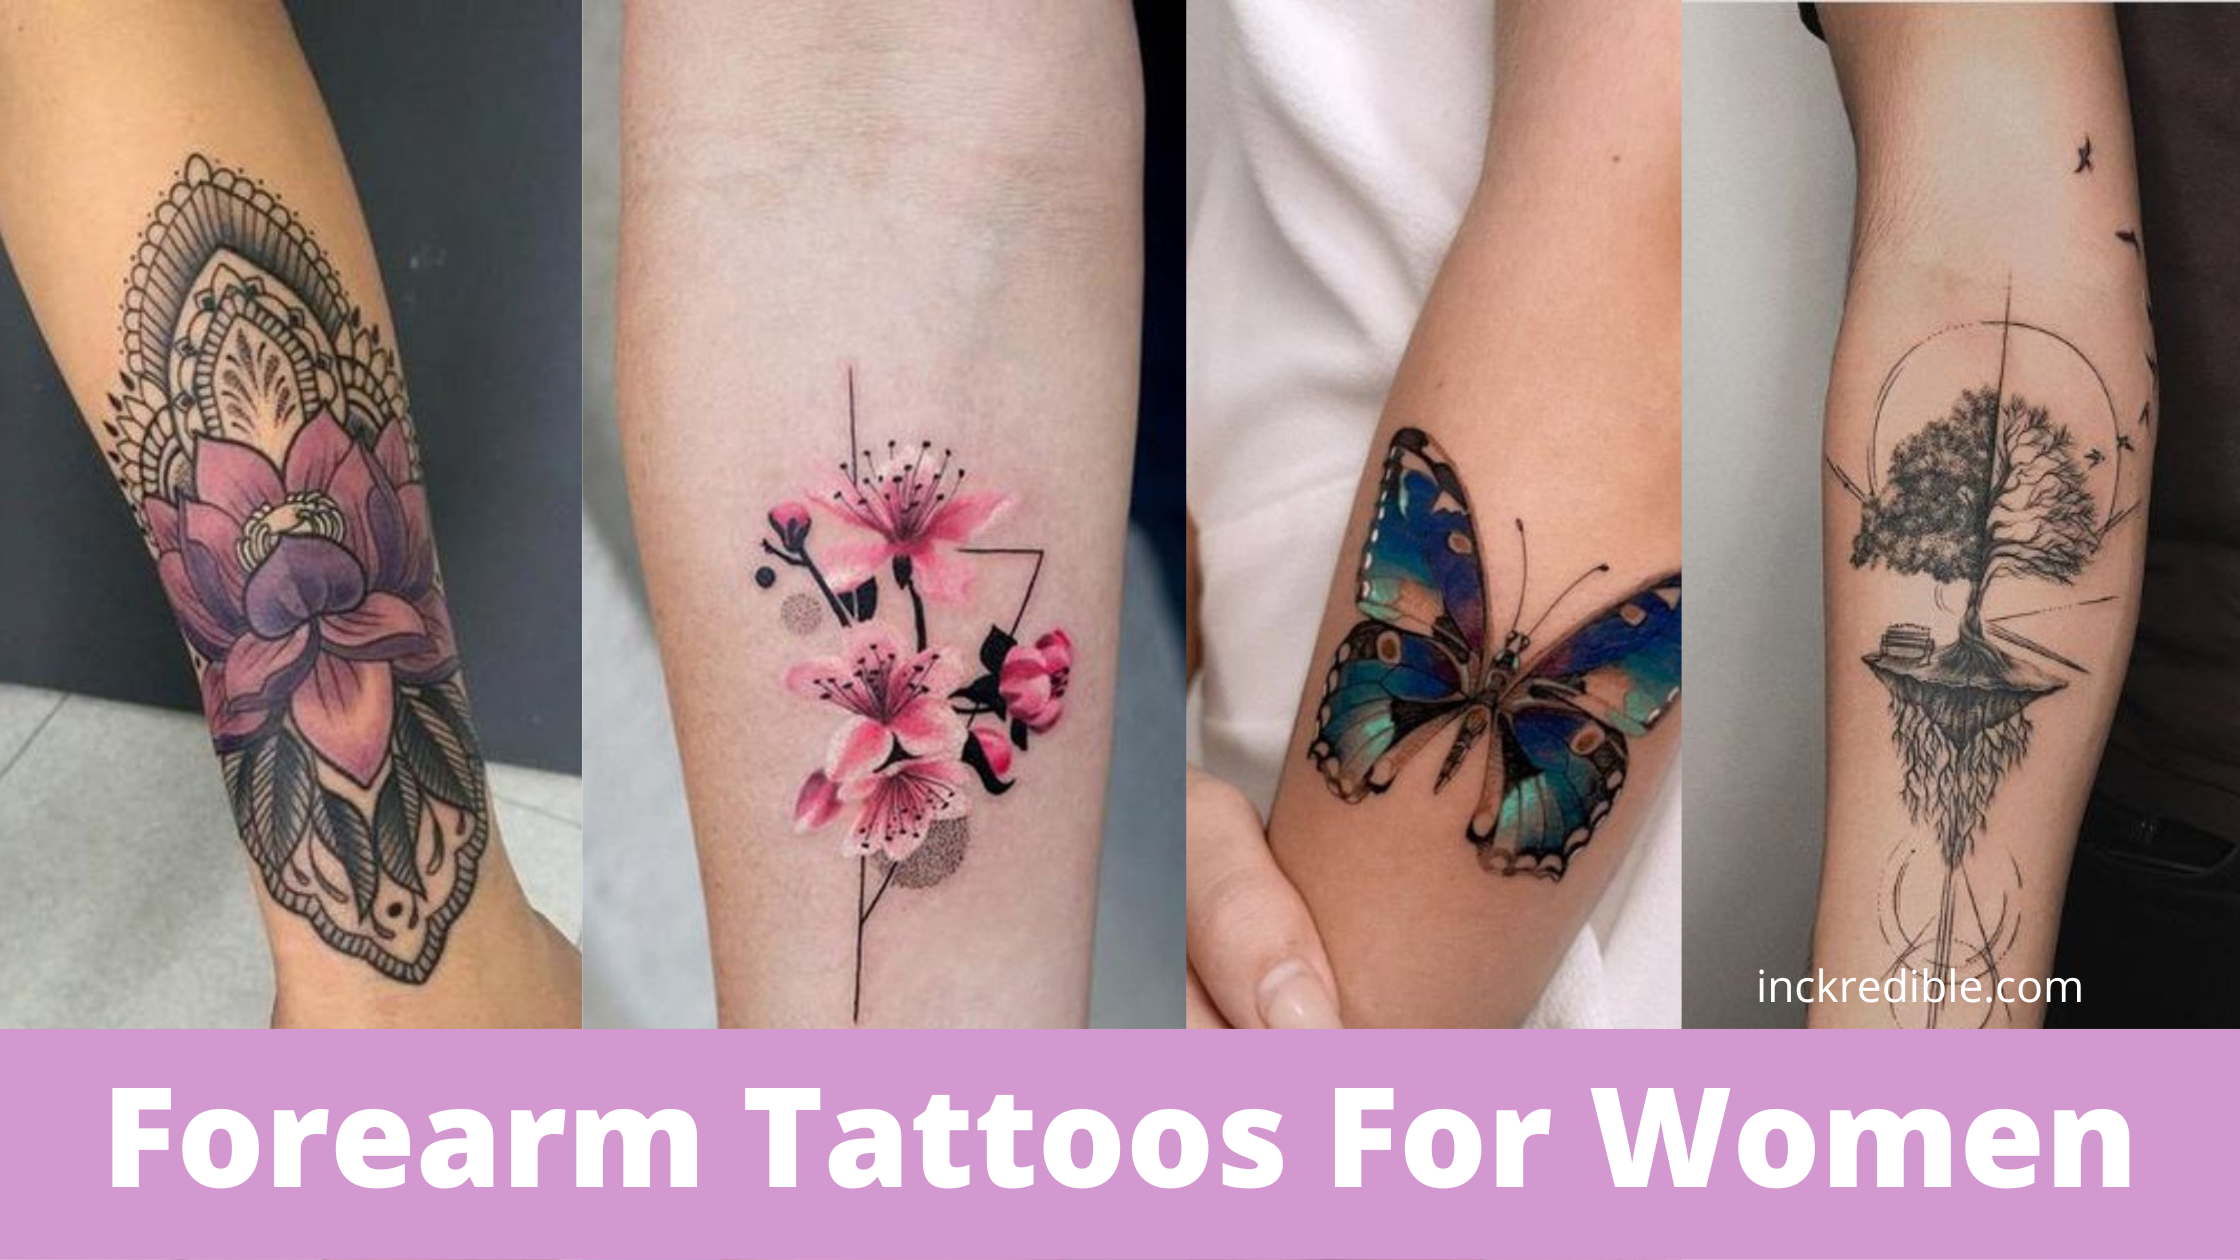 43 Forearm Tatoos For Women - TattooTab